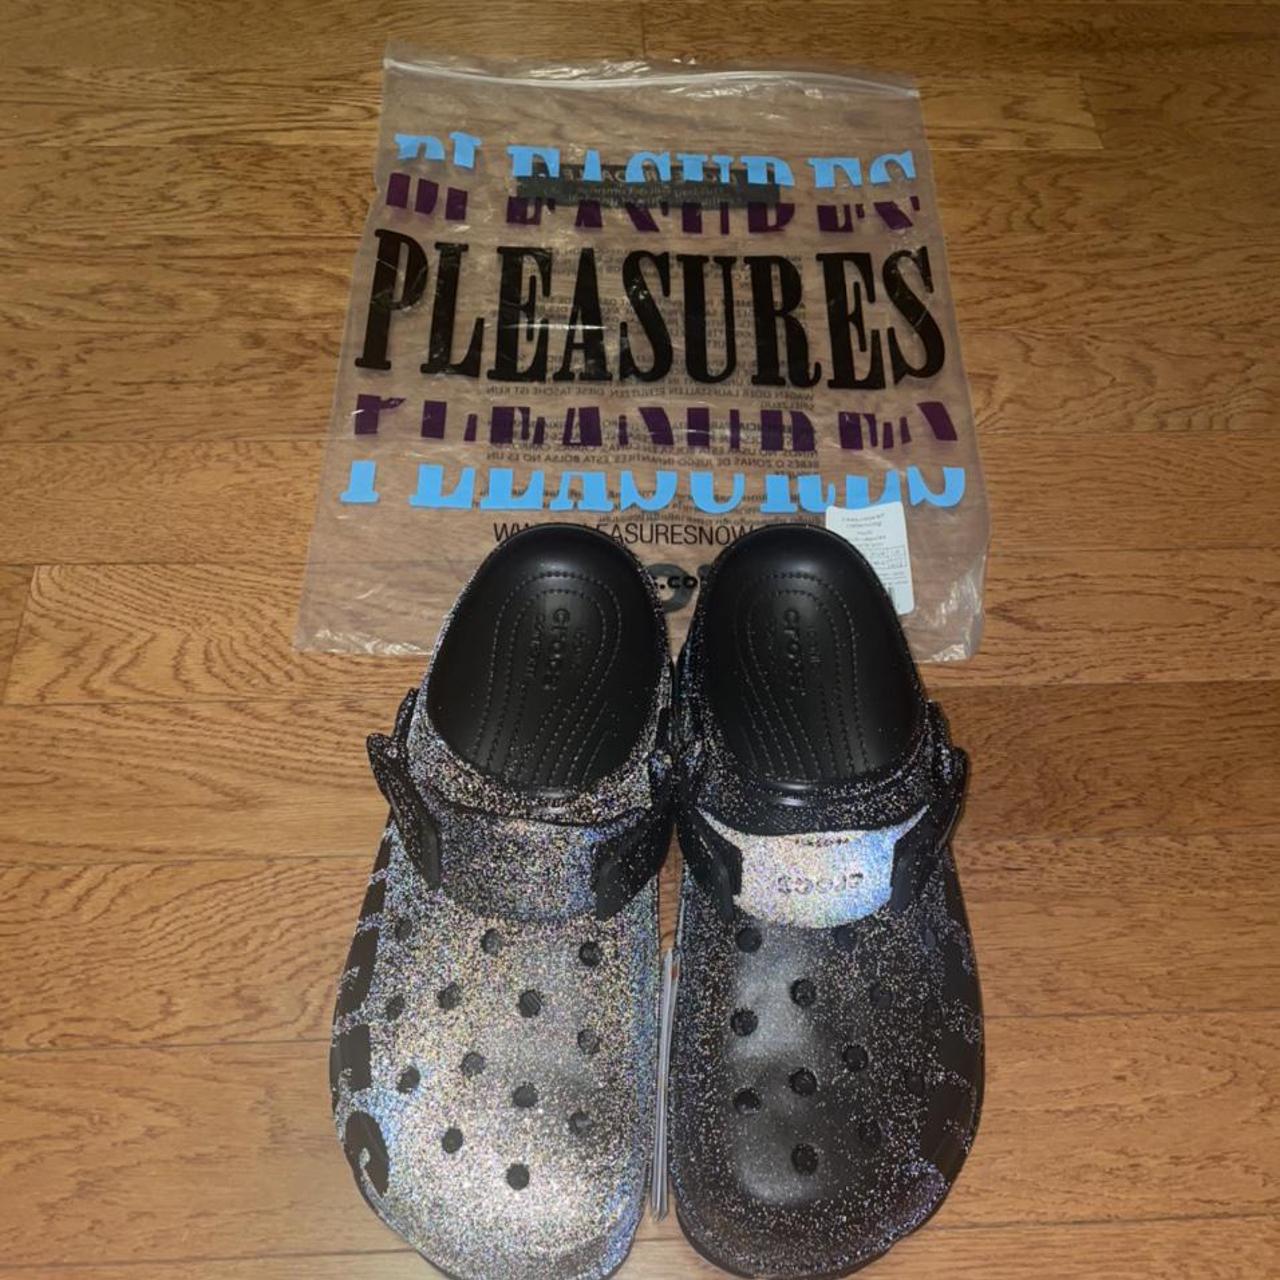 Pleasures Men's Slides (2)